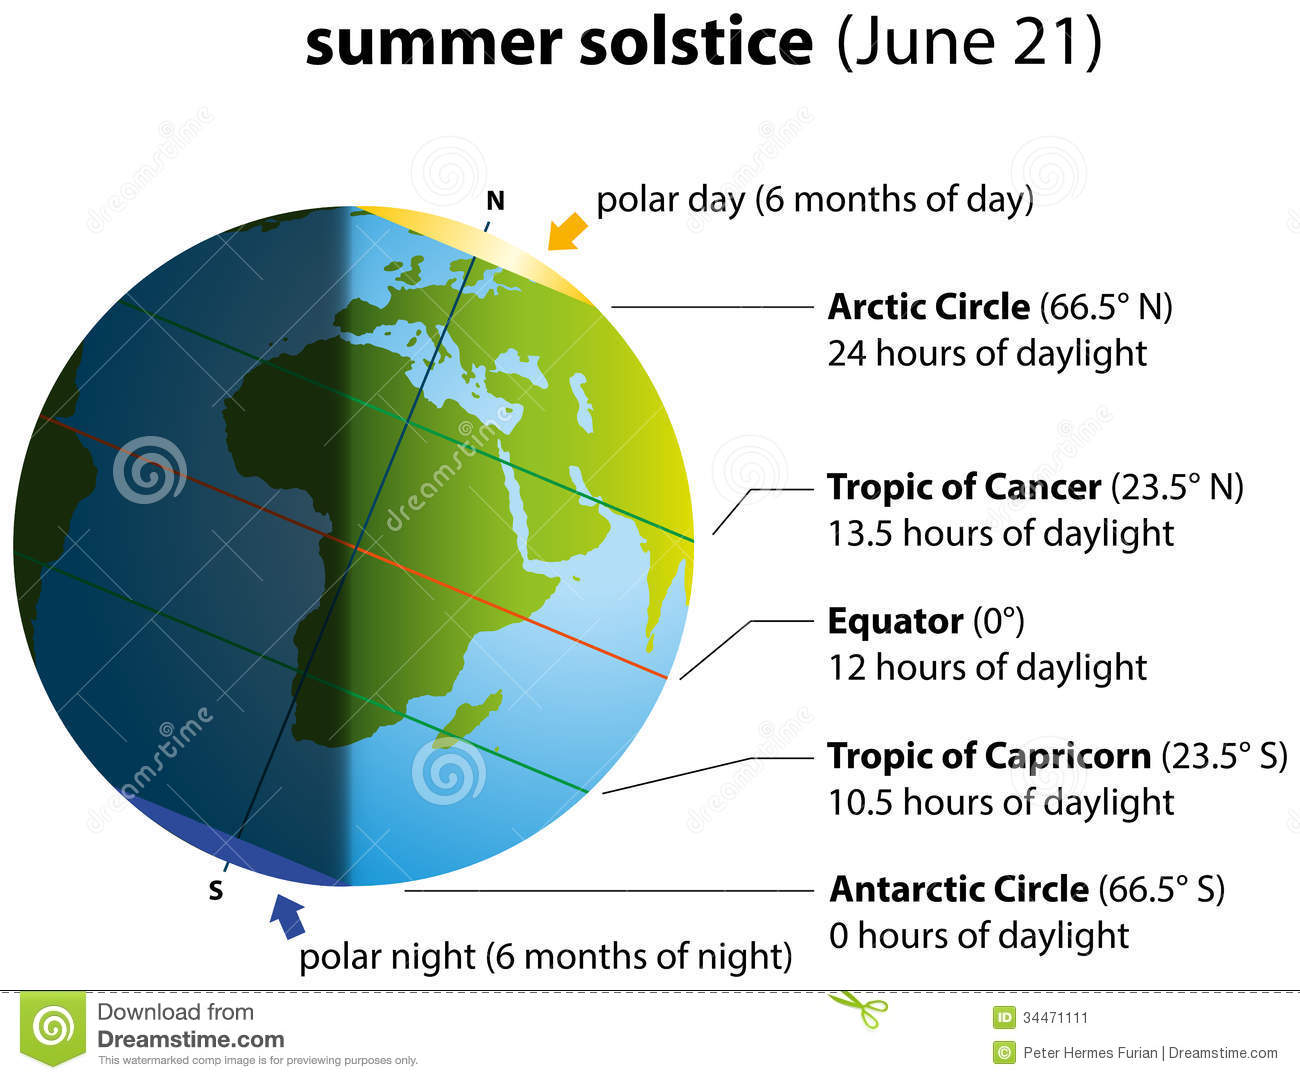 summer-solstice-illustration-june-globe-continents-sunlight-shadow-34471111